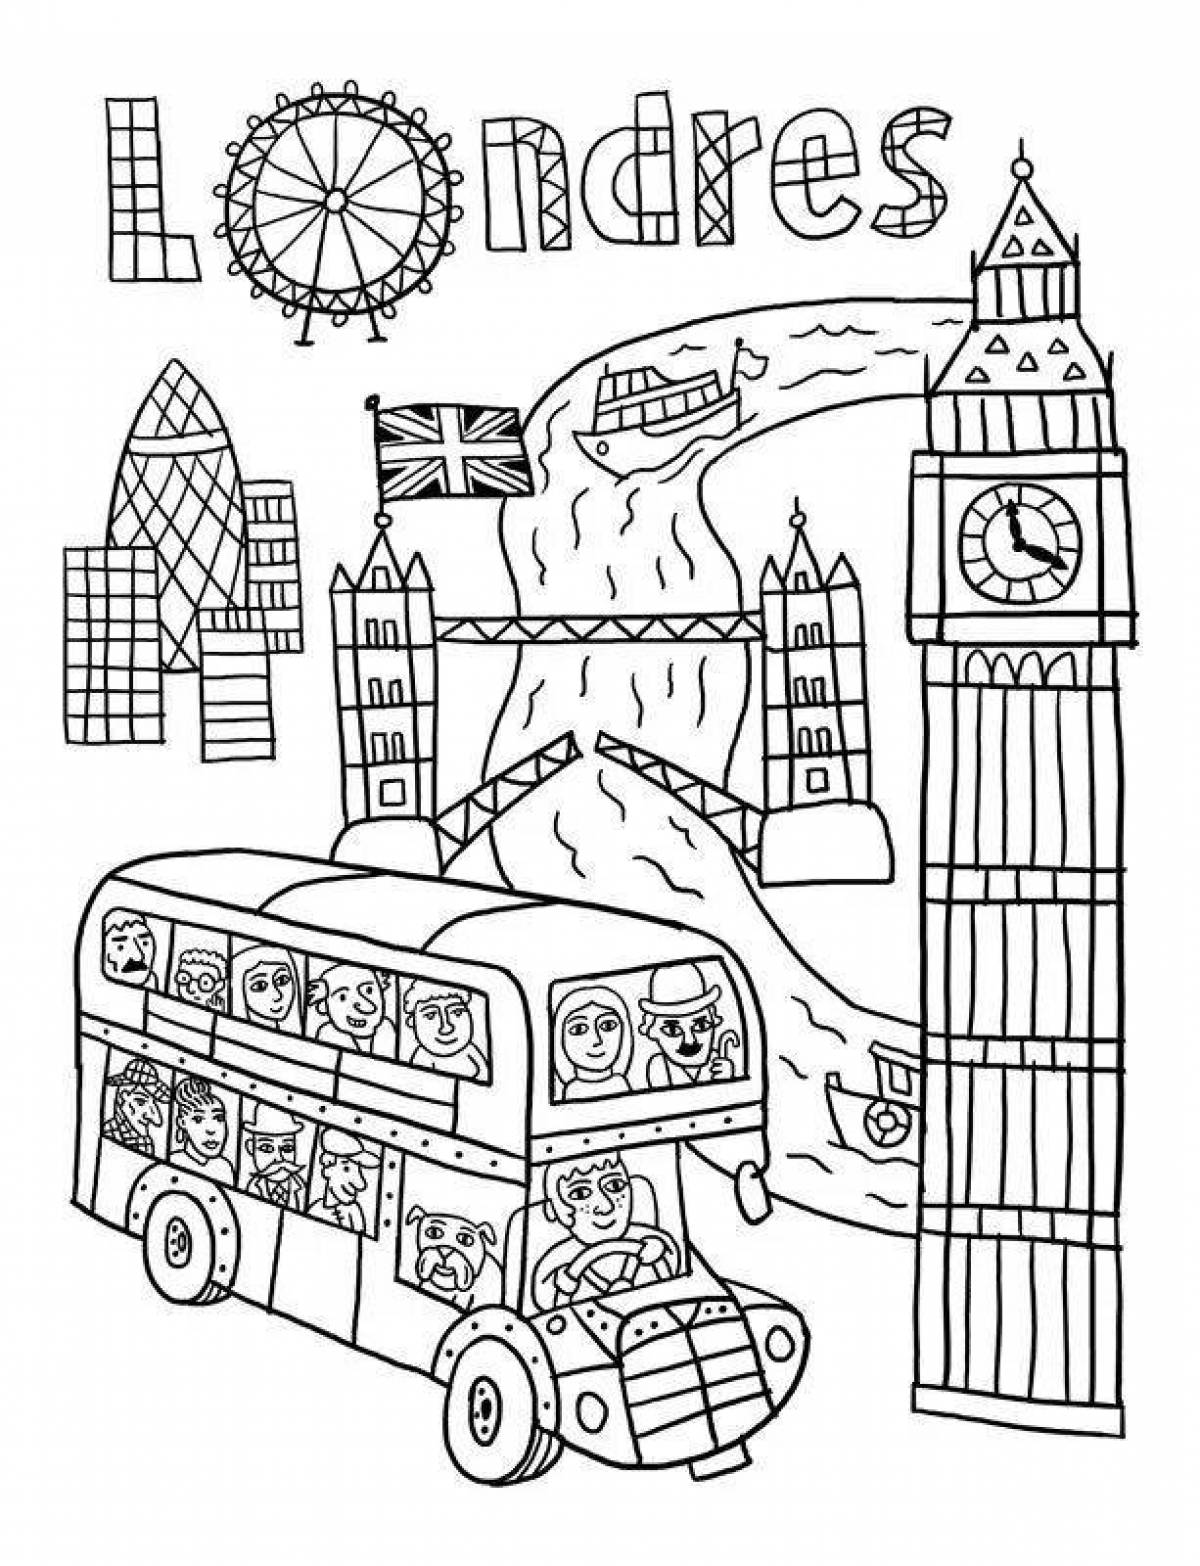 London shining sights coloring page